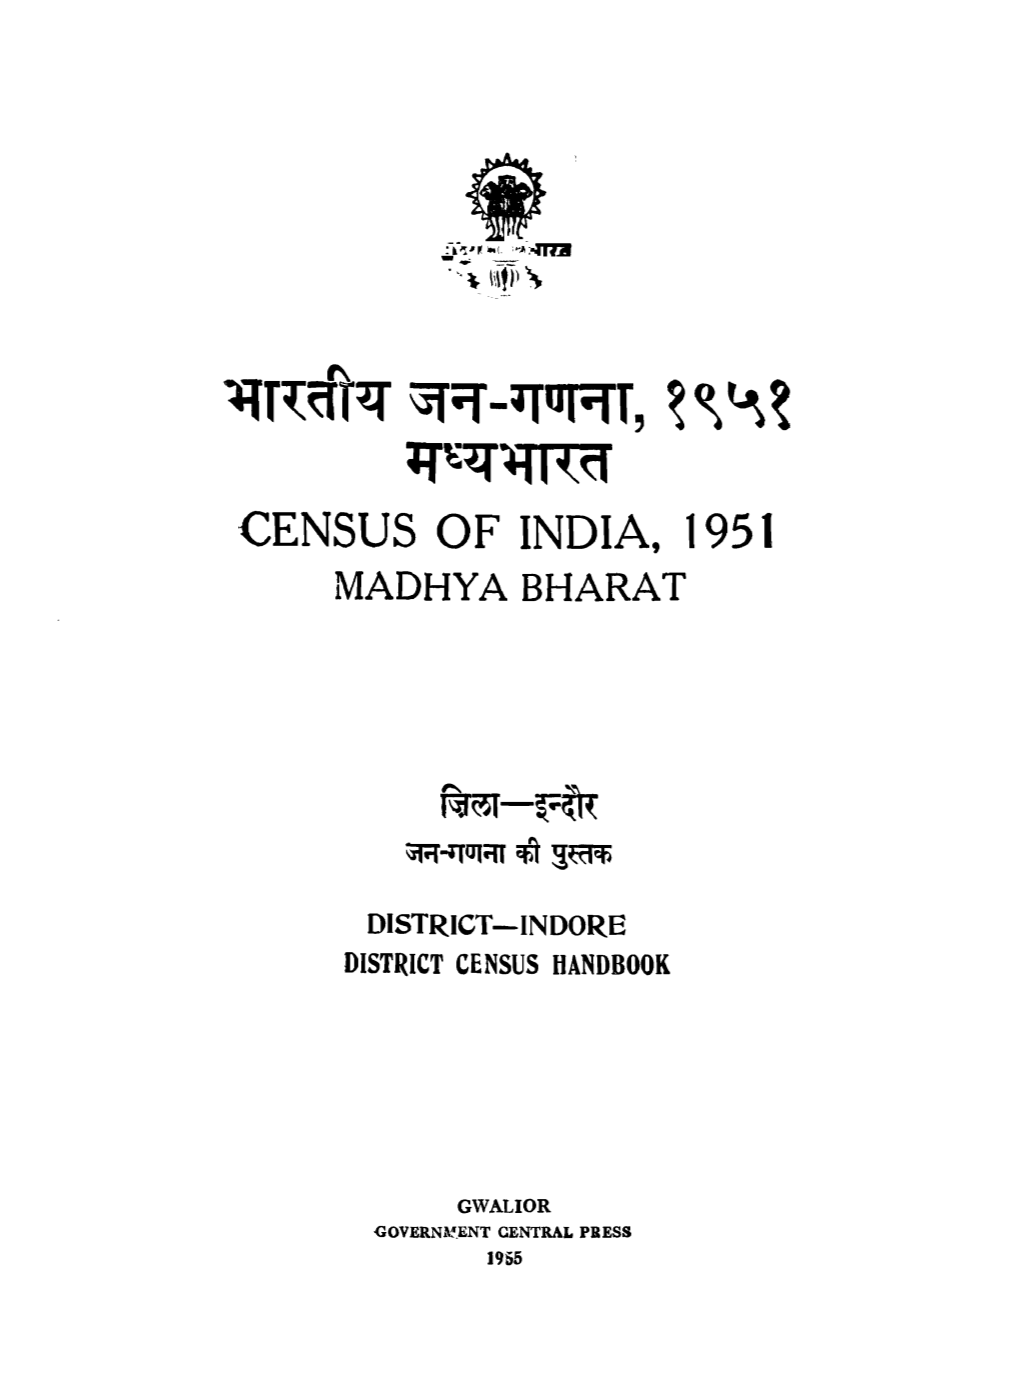 District Census Handbook, Indore, Madhya Pradesh